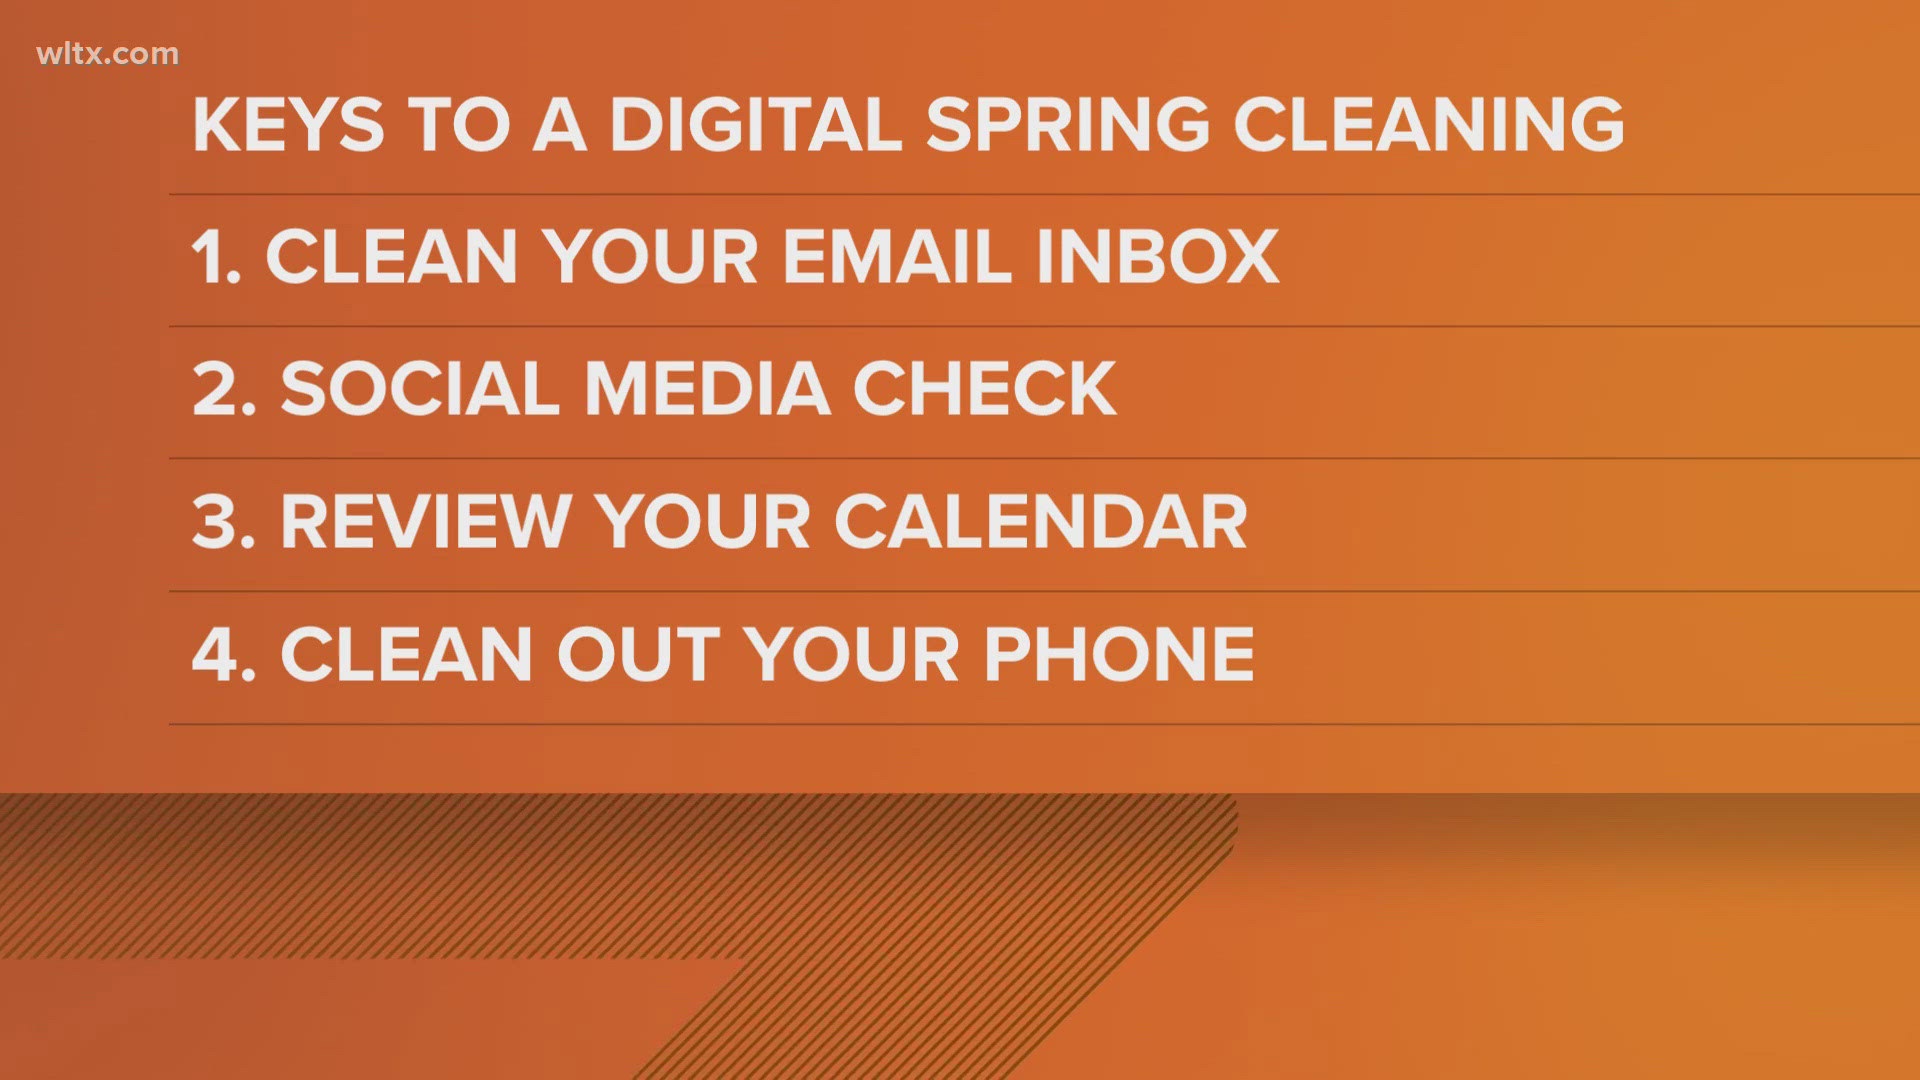 Digital strategist Roshanda Pratt offers some tips for doing a digital spring cleaning this year.